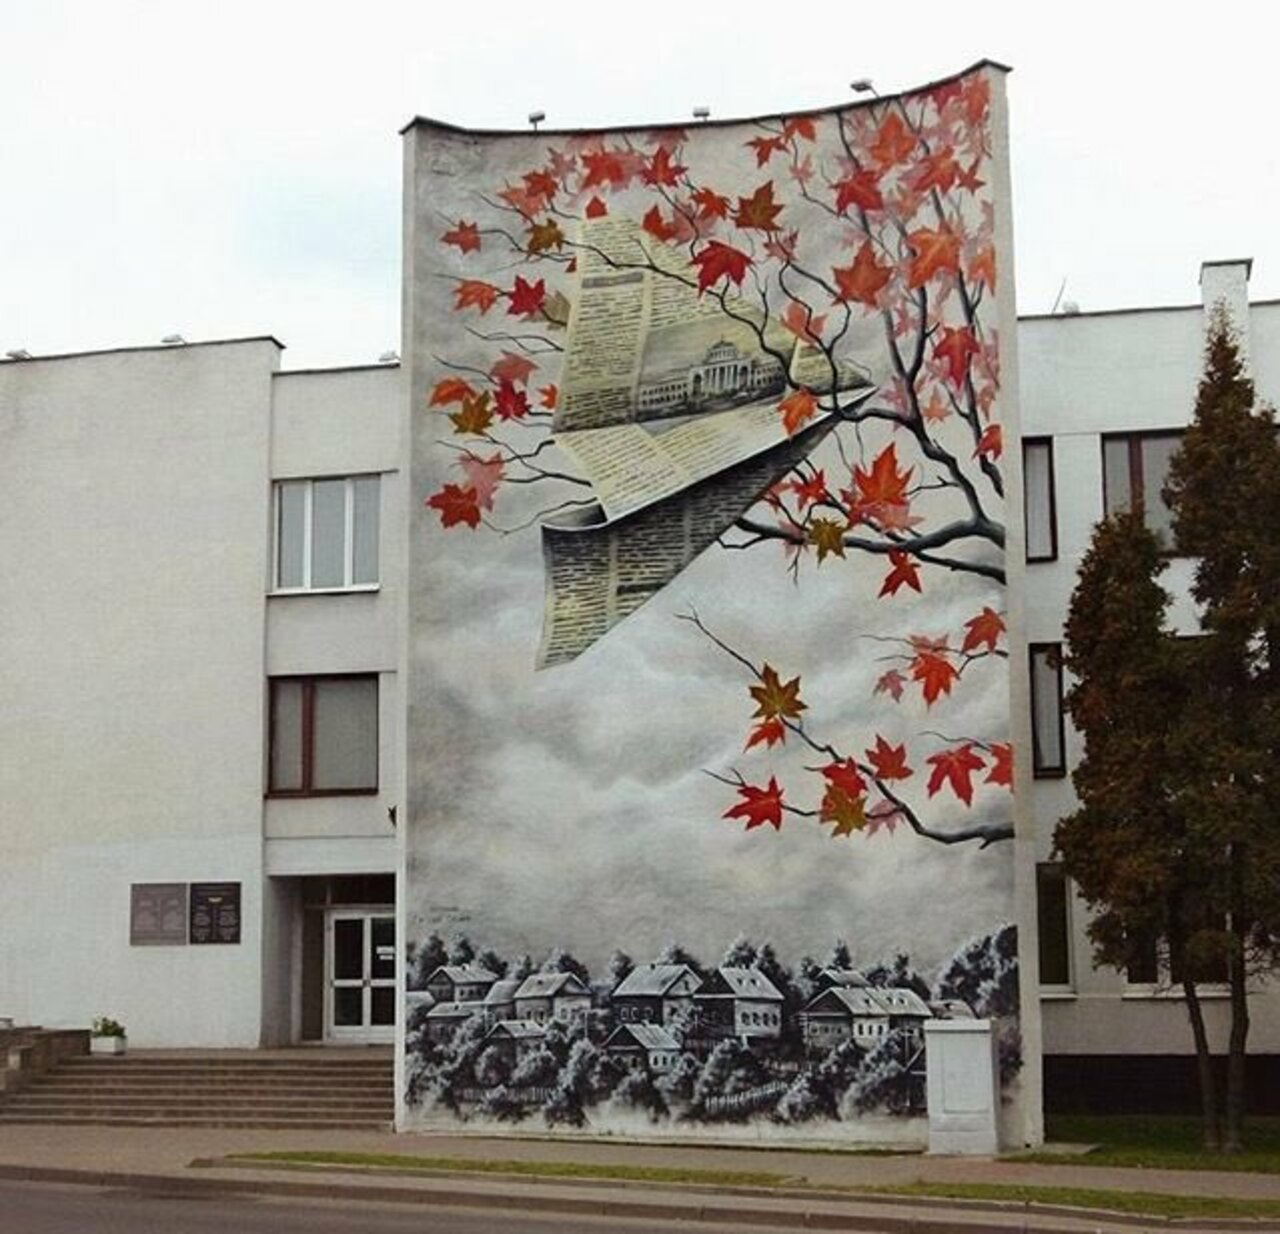 New Street Art by MUTUS in Belarus 

#art #graffiti #mural #streetart https://t.co/DSS566UyEC